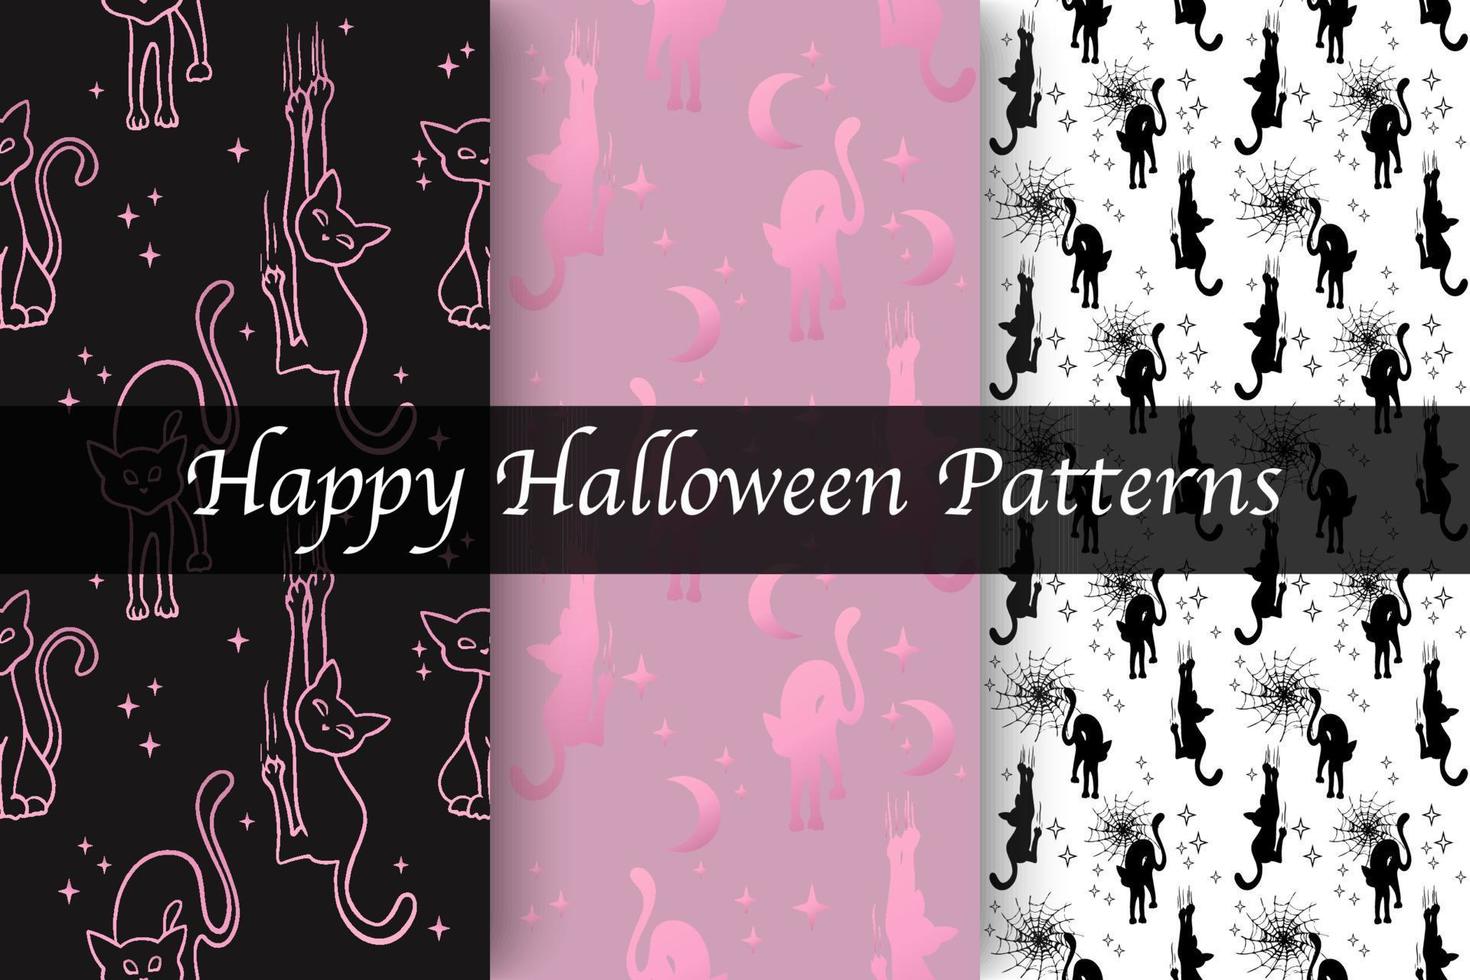 patrón de moda. feliz Halloween. murciélagos, gatos, calabazas con web. boo.. dibujo a mano alzada. ilustraciones modernas de vectores de línea continua. dulces o vida